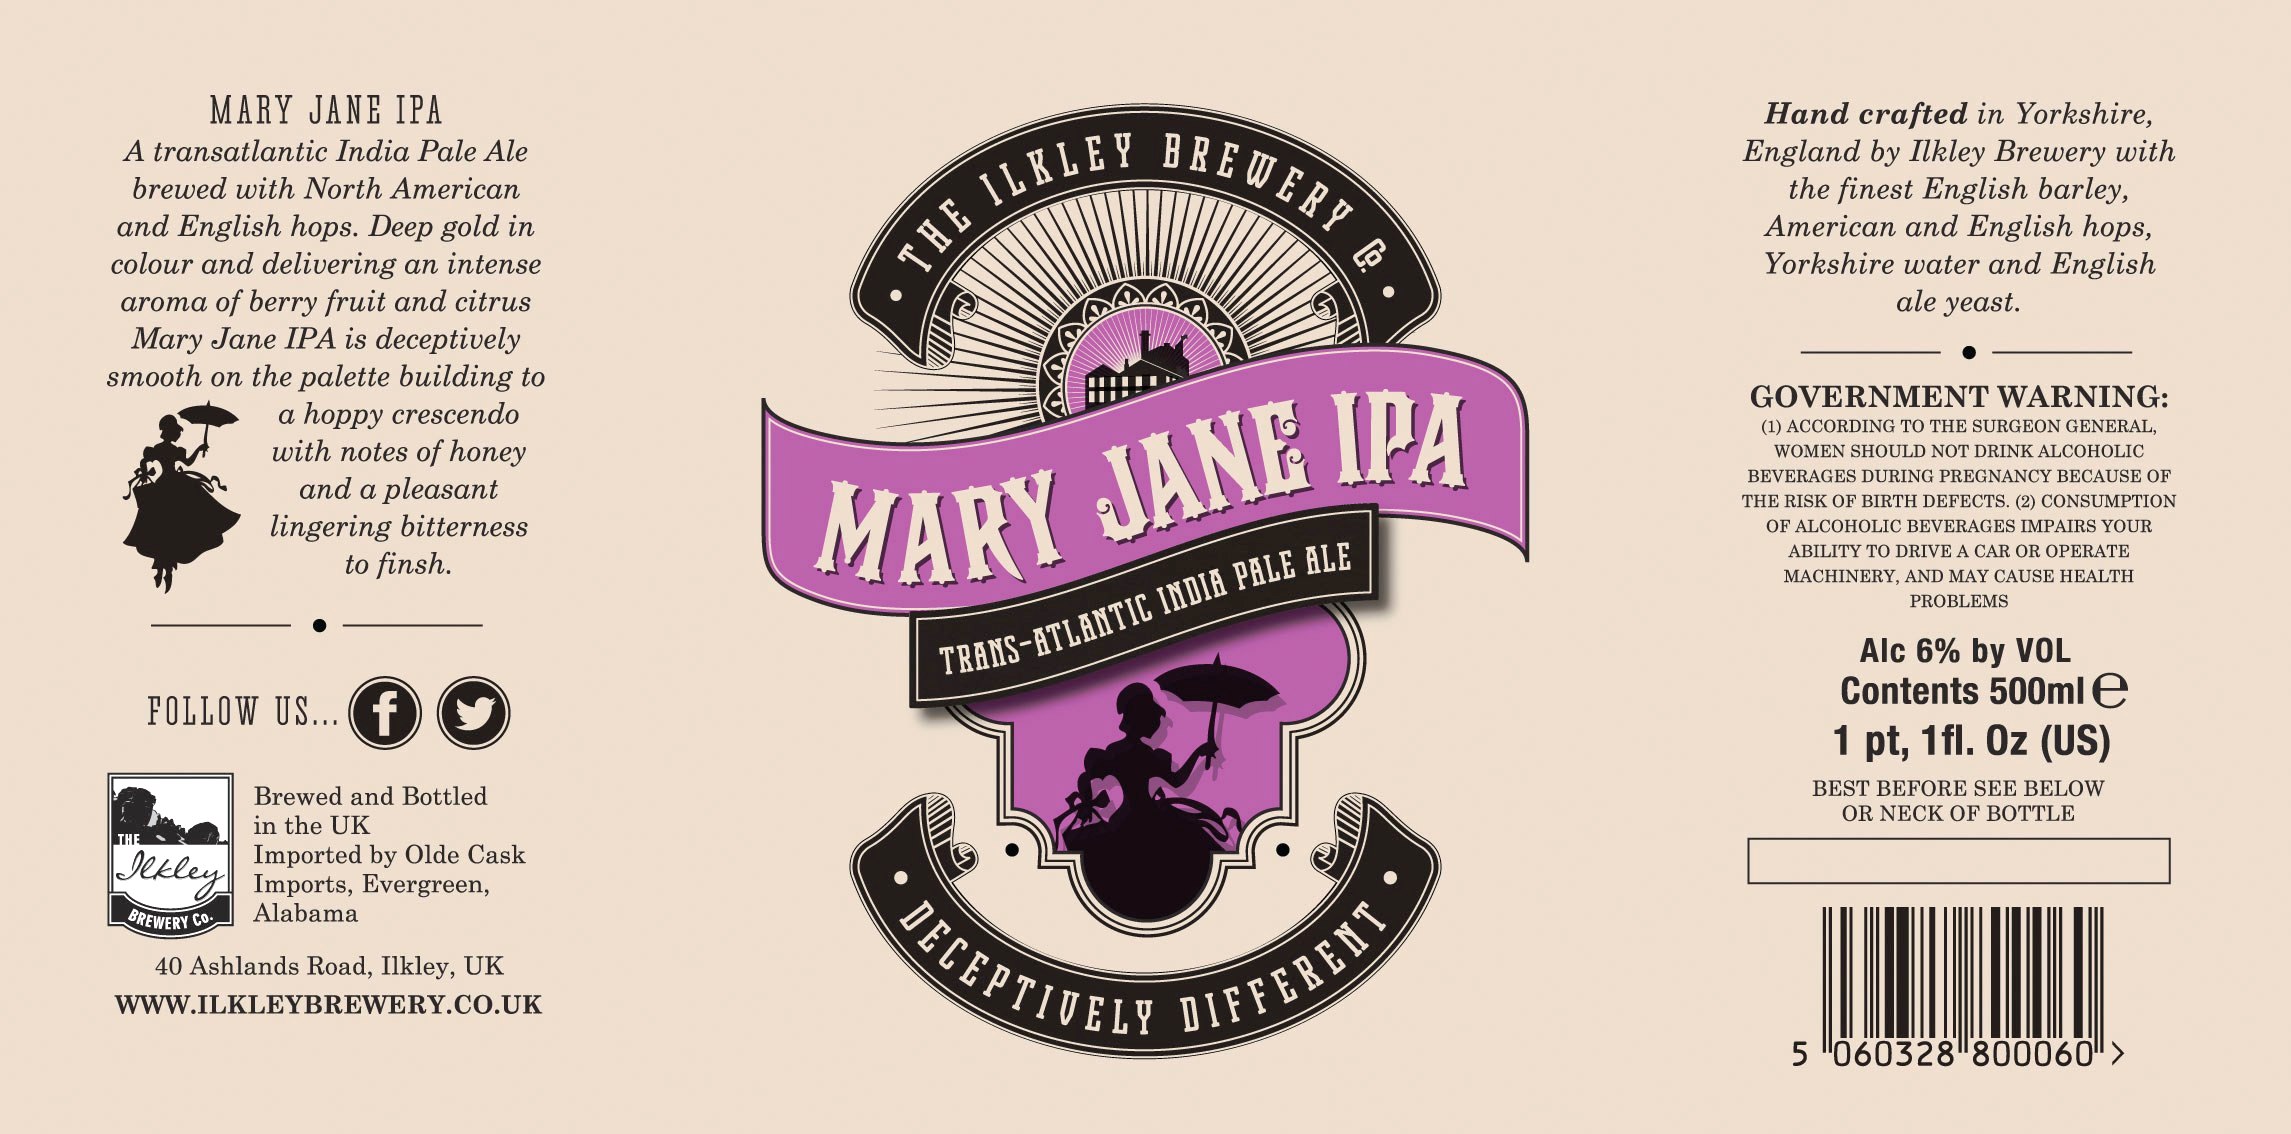 The Ilkley Brewery Mary Jane IPA